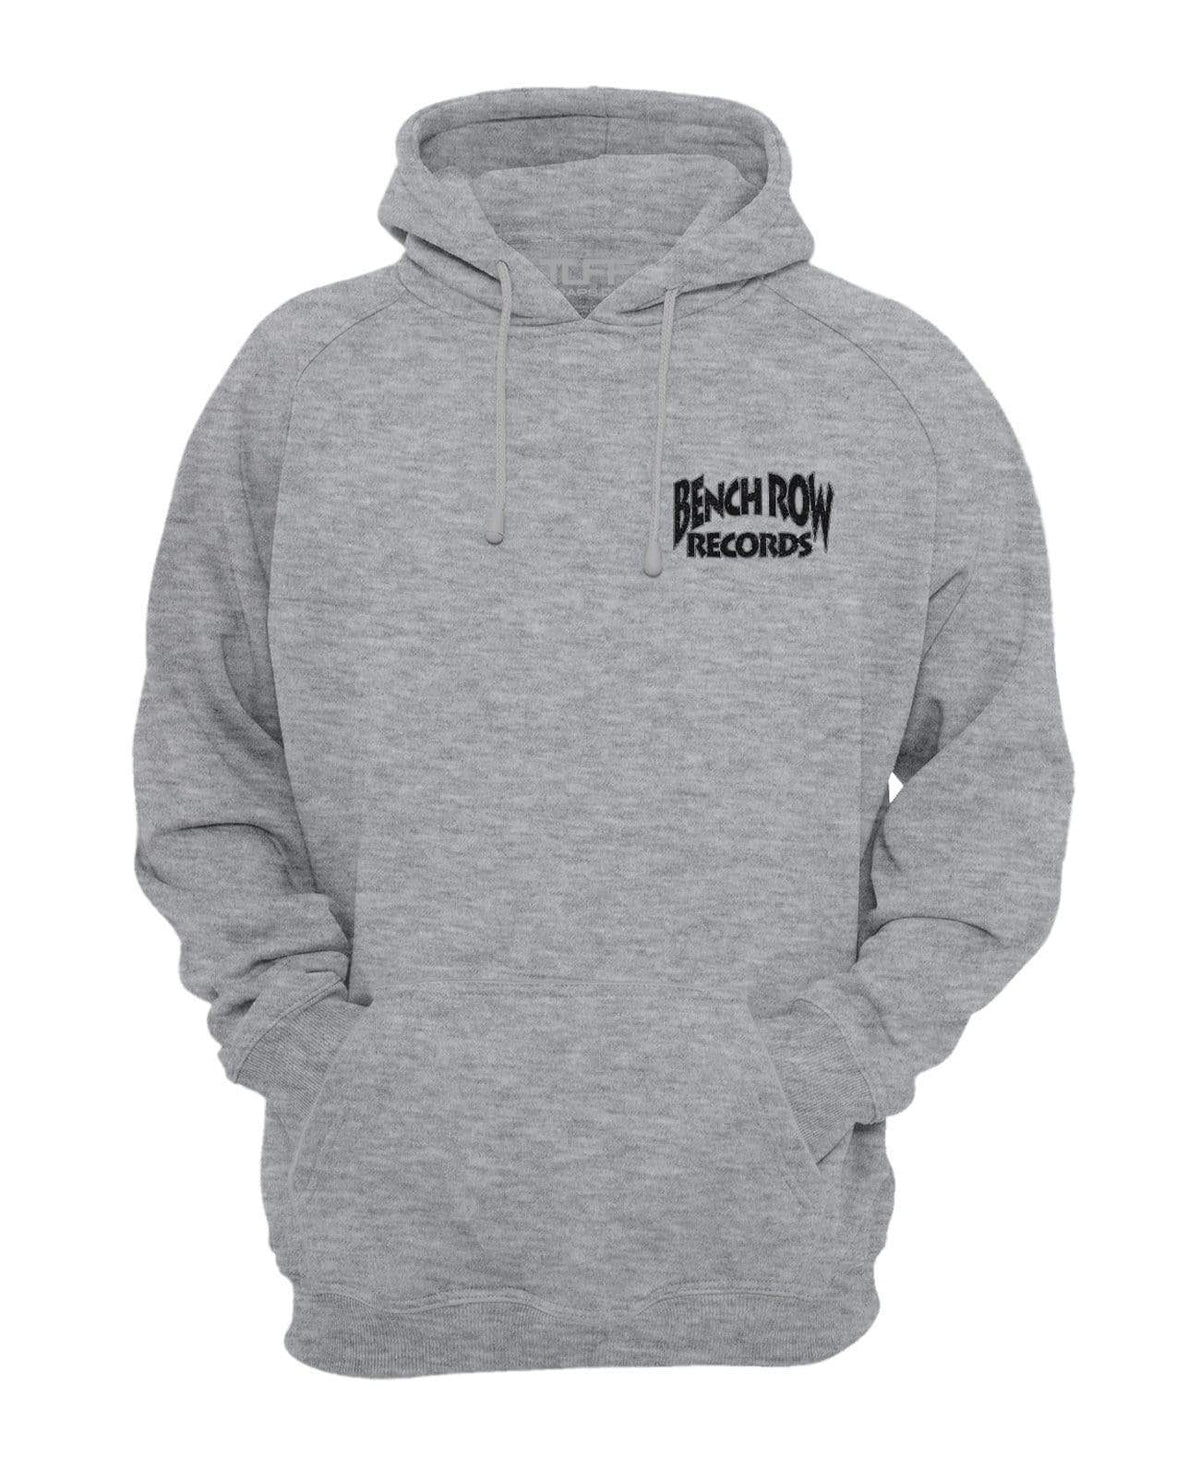 Bench Row Records Hooded Sweatshirt Men&#39;s Sweatshirts